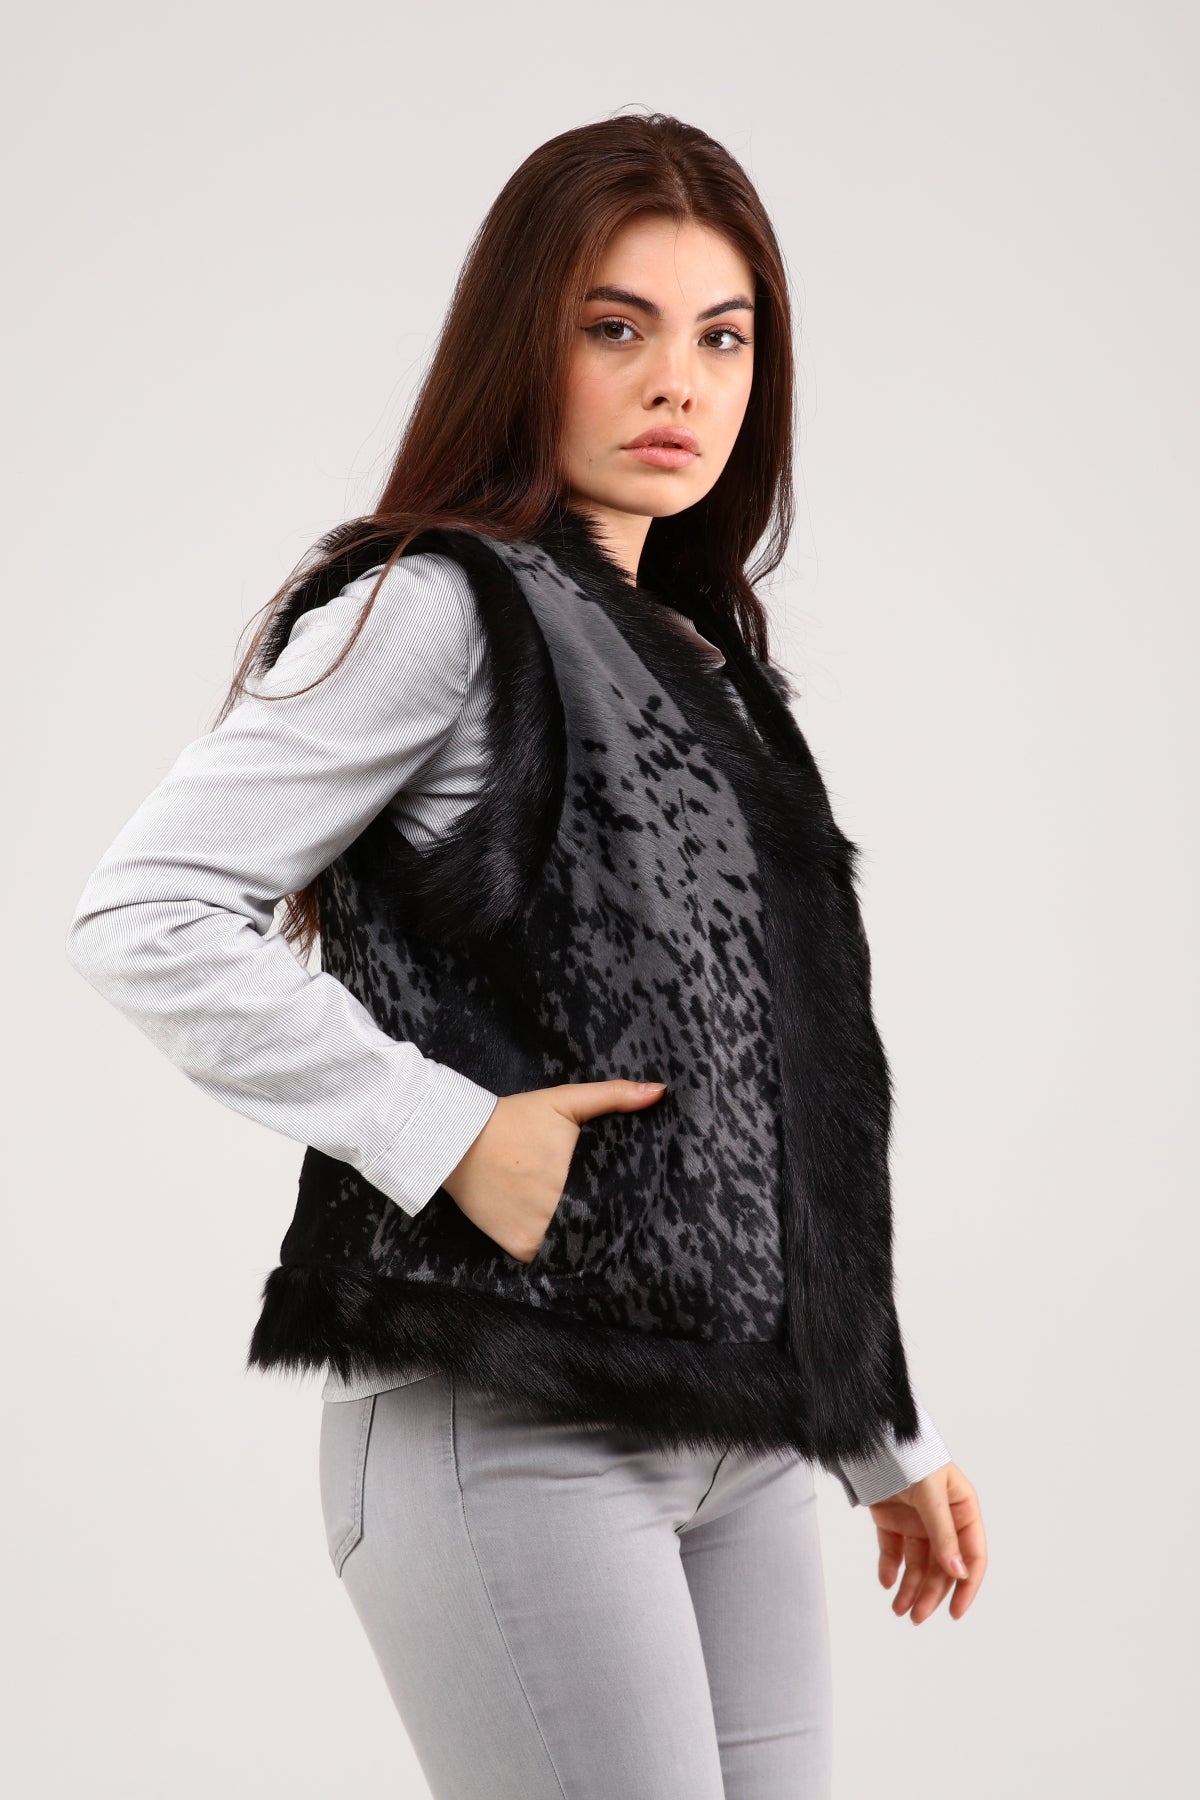 Gray Women's Patterned Leather Vest